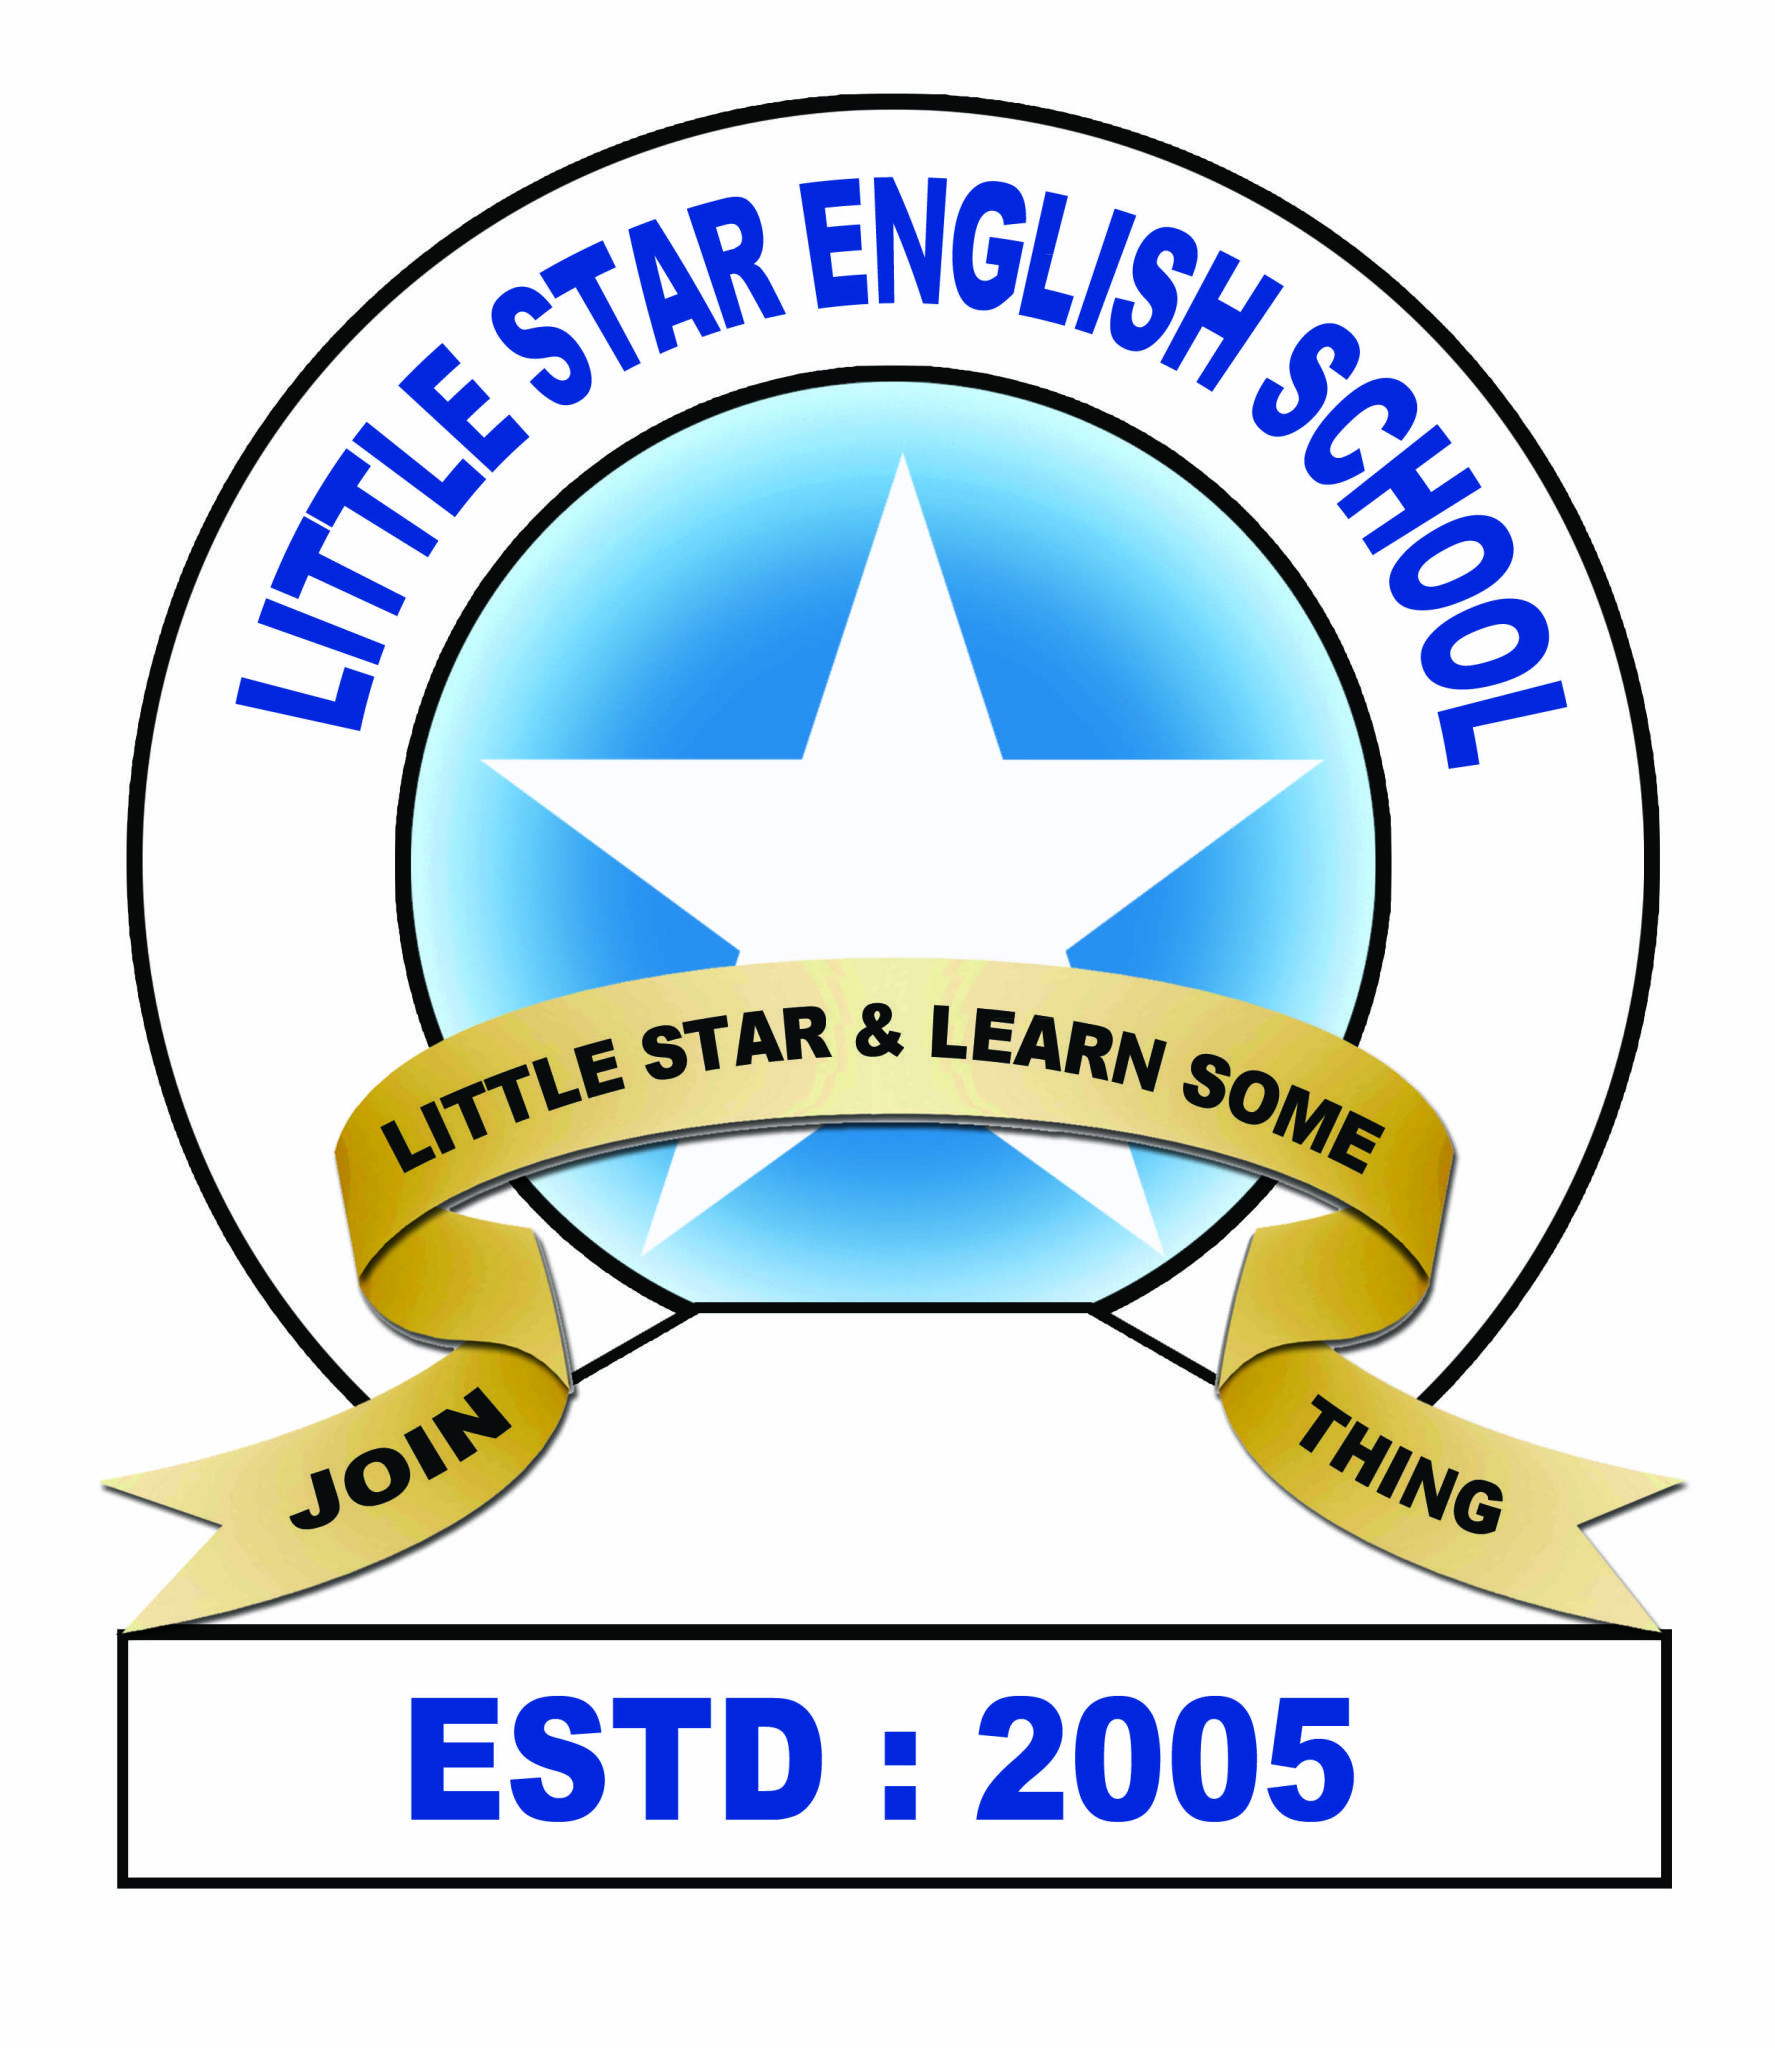 Little Star English School|Schools|Education